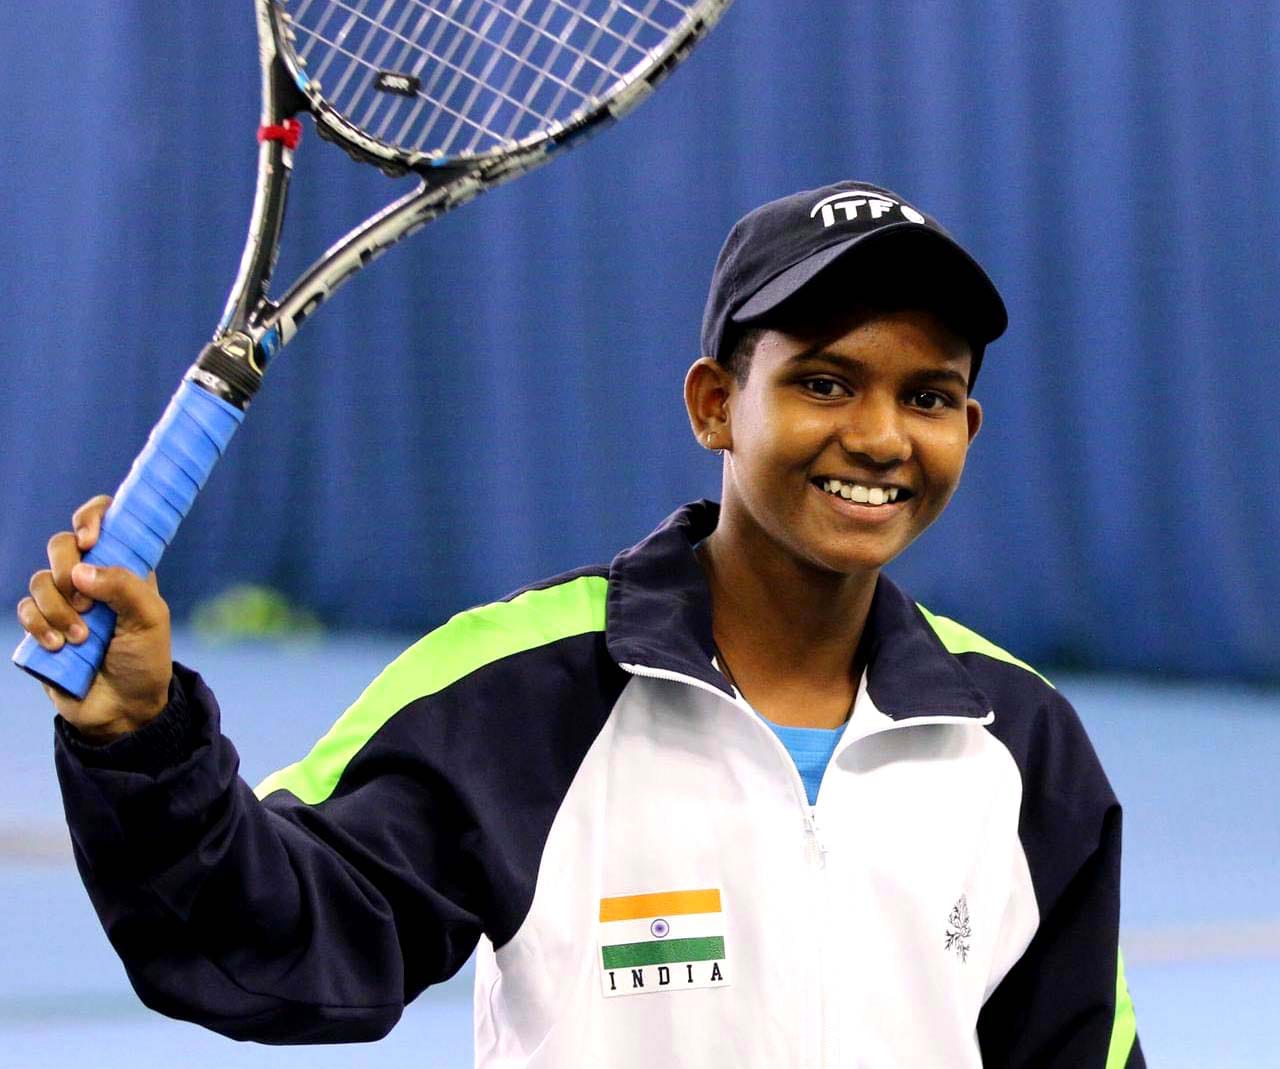 Odisha's Tennis Sensation Aahan Becomes India's No. 1 In Girls’ U-14 Category